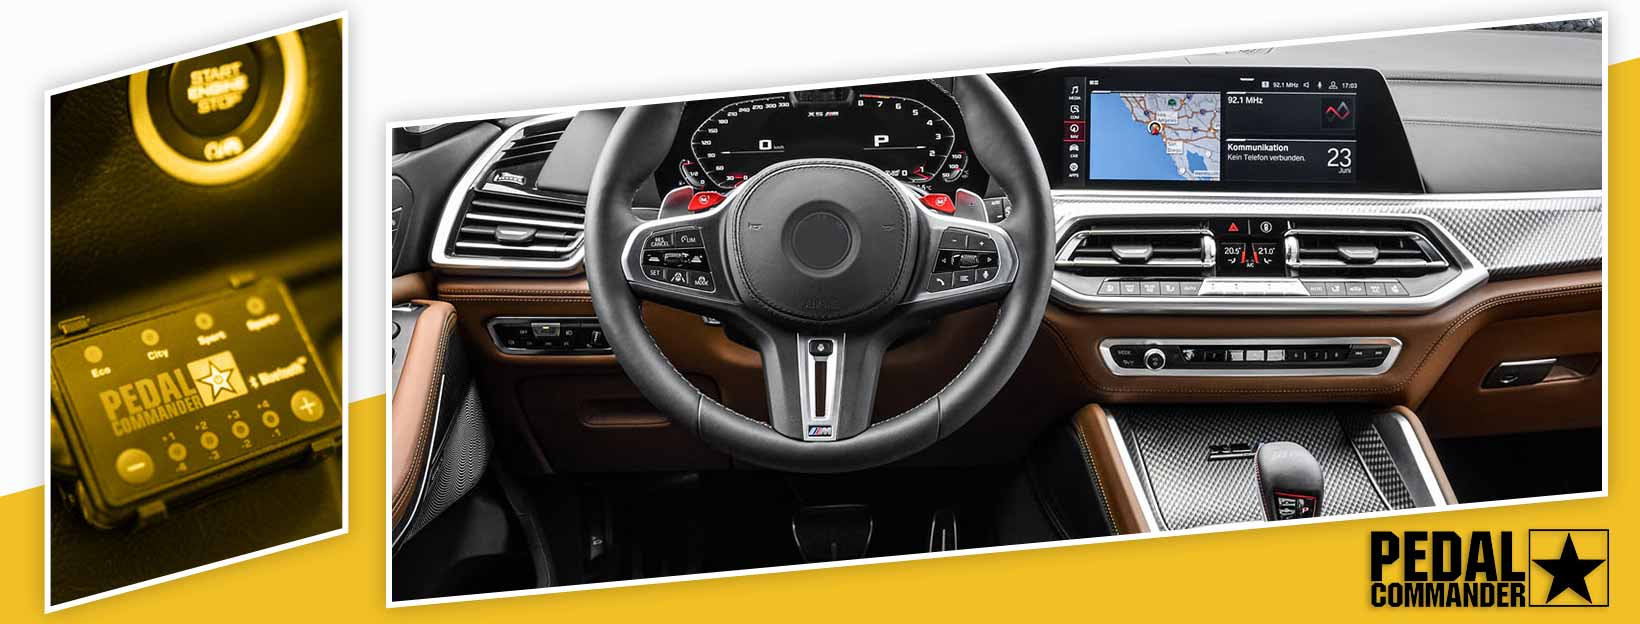 Pedal Commander for BMW X5 - interior